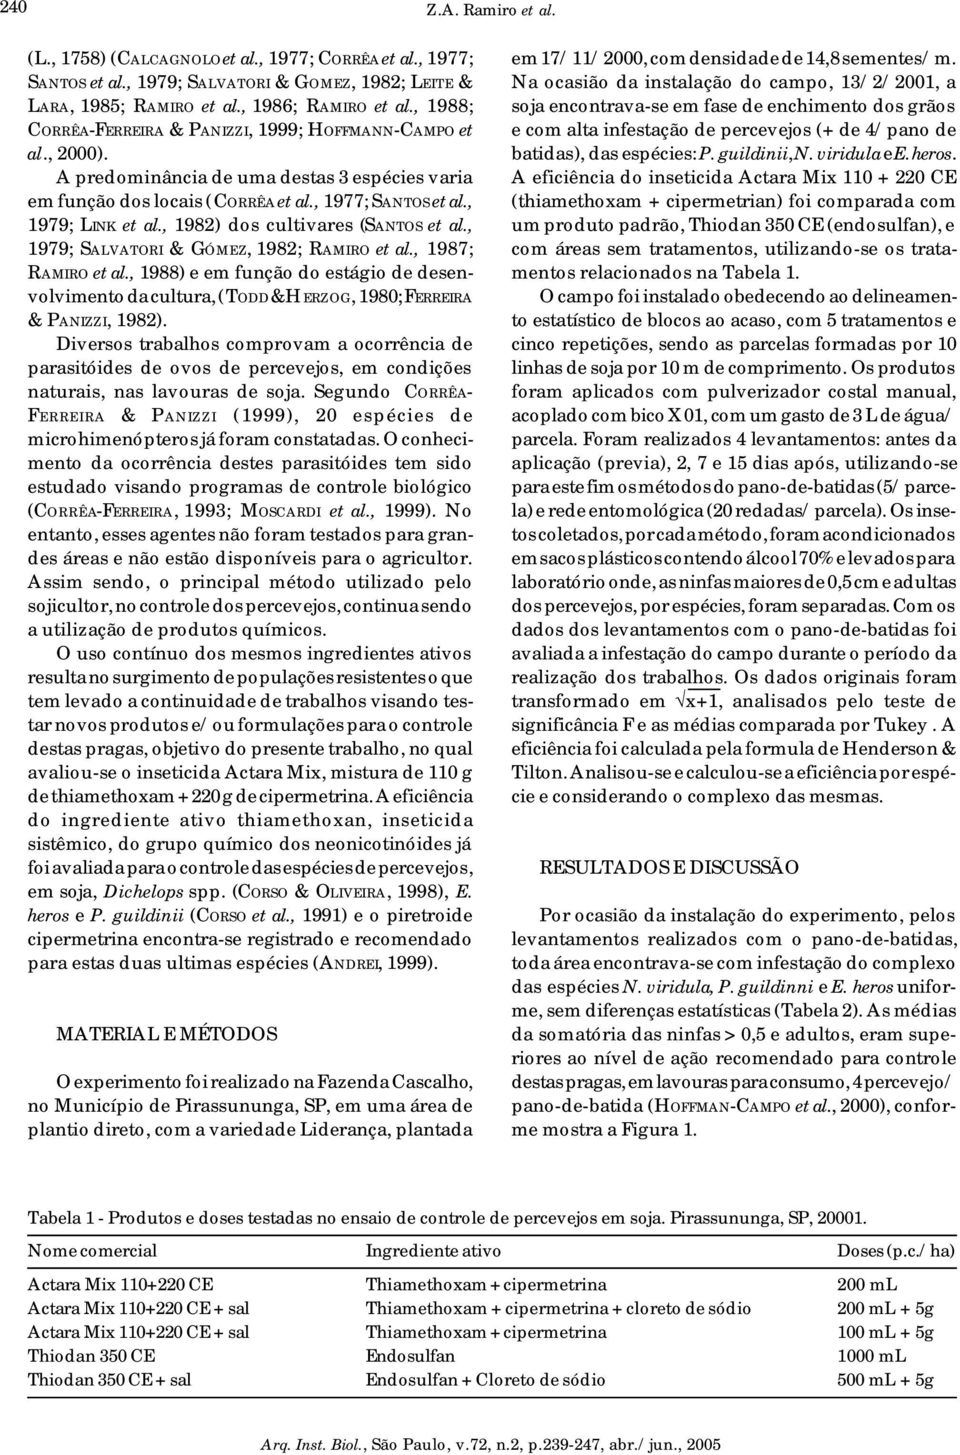 , 1982) dos cultivares (SANTOS et al., 1979; SALVATORI & GÓMEZ, 1982; RAMIRO et al., 1987; RAMIRO et al.